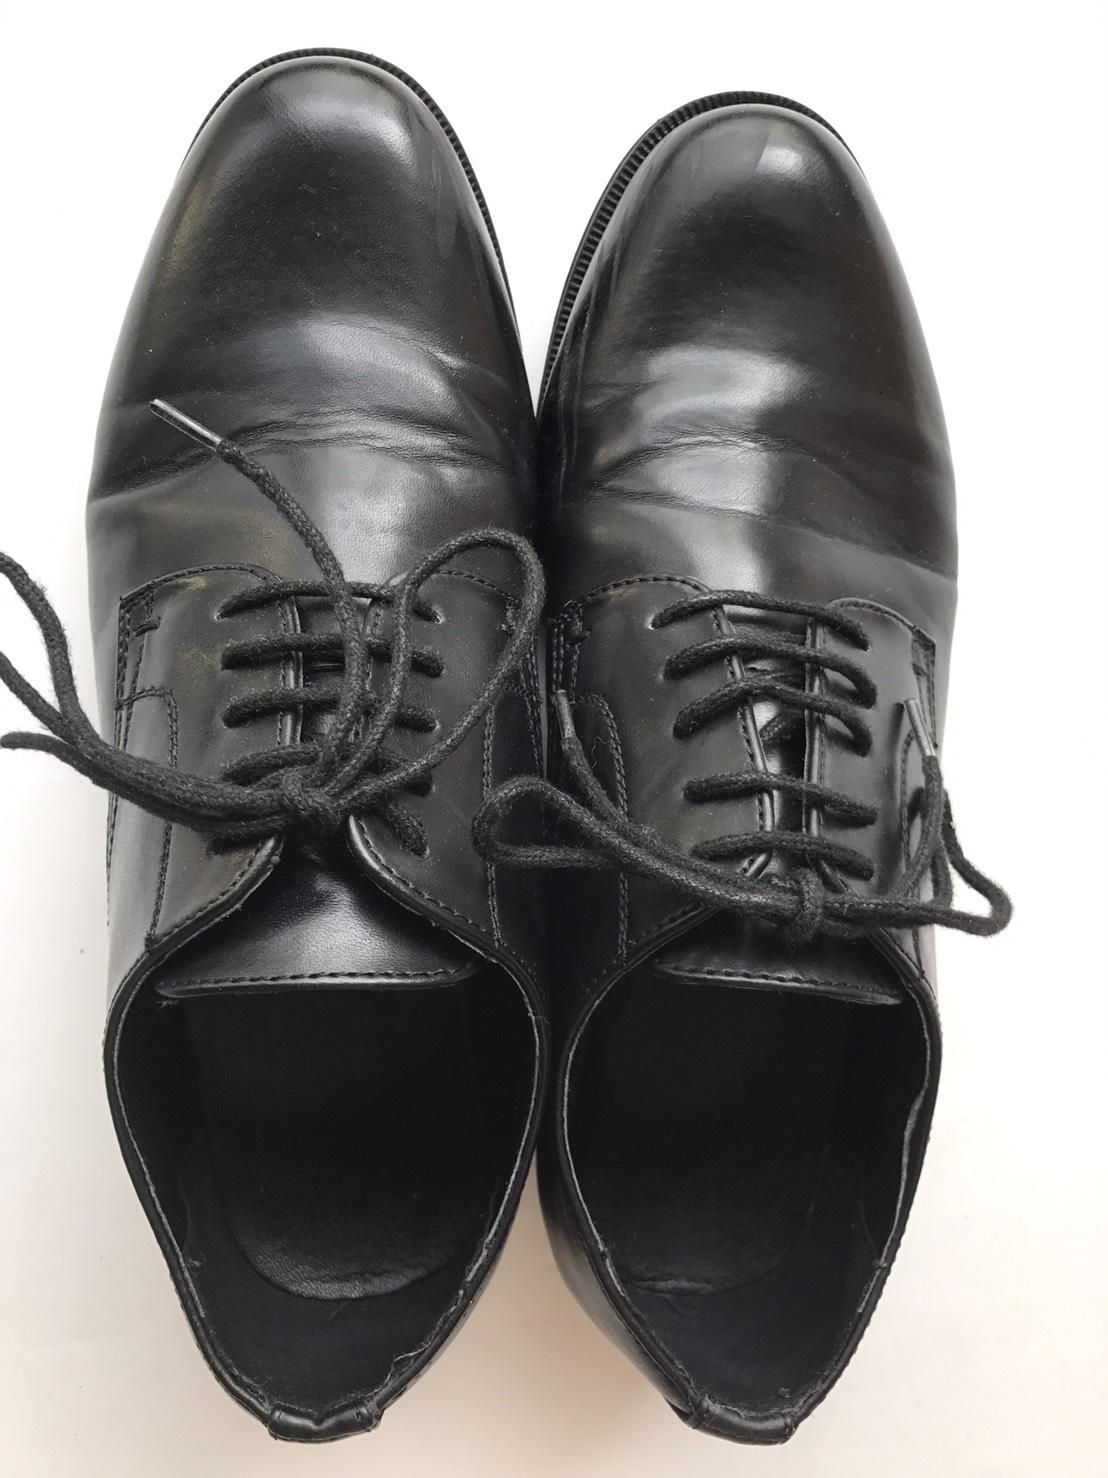 GU「ダービーシューズ」は革靴好きも認めるシルエット！2万円の革靴に見せる裏技も - 服ログ